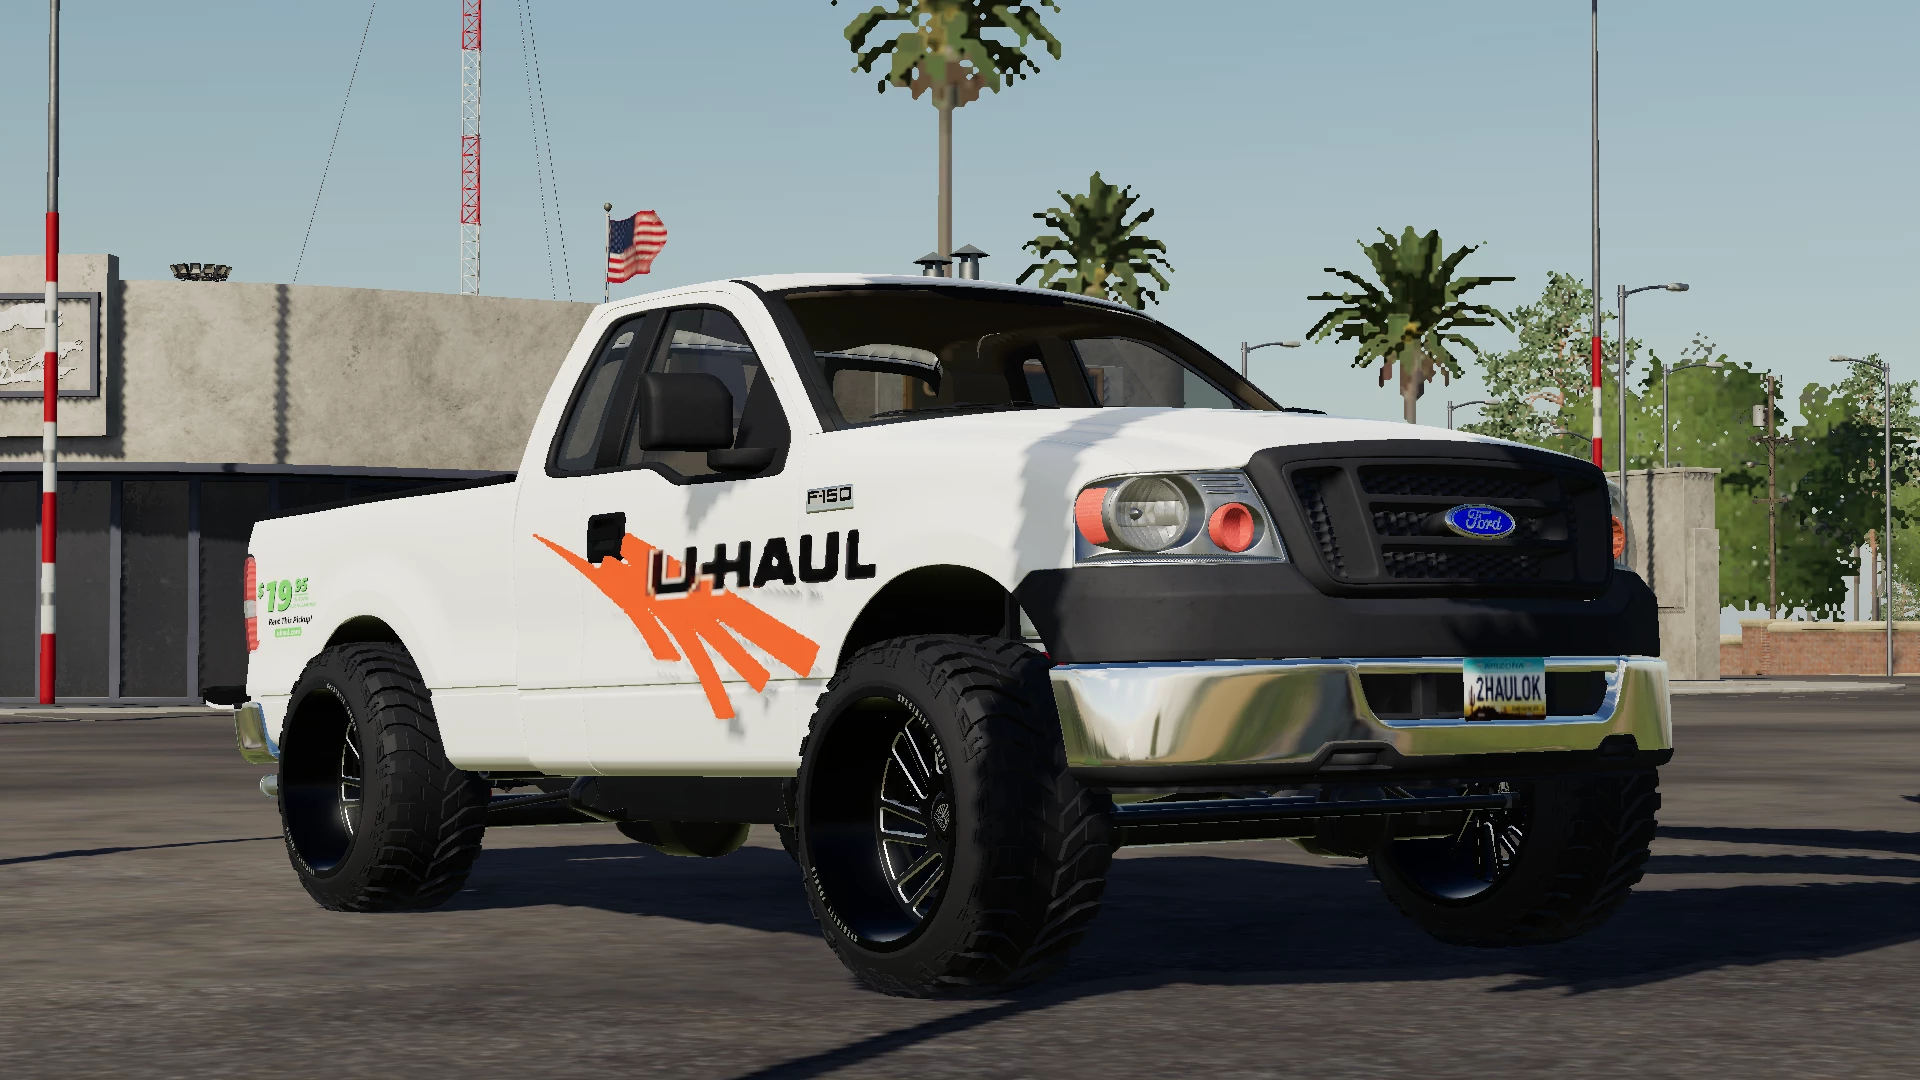 U-Haul Pickup Truck